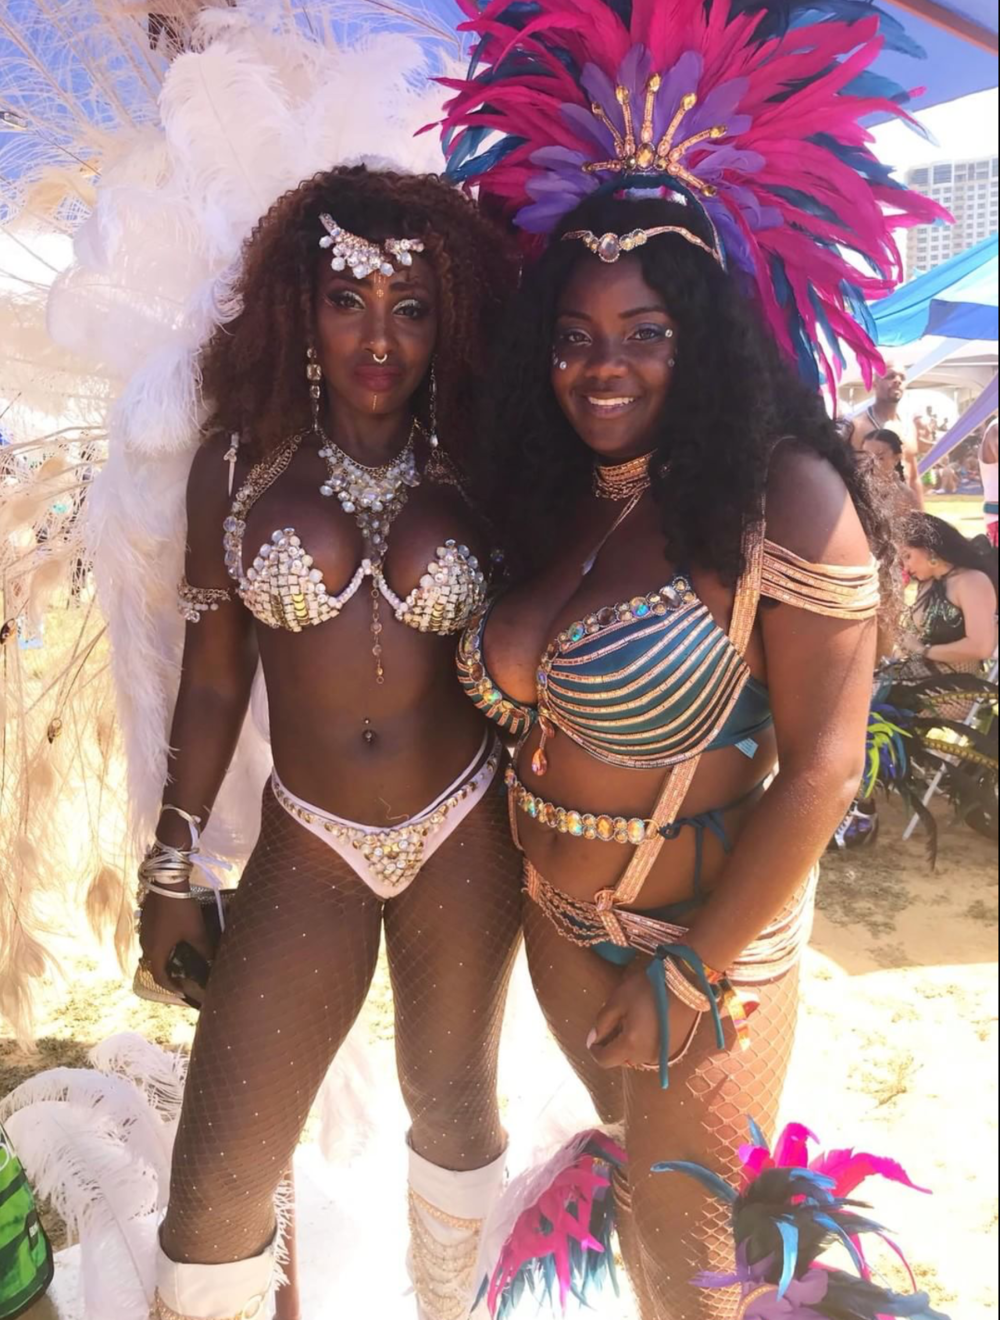  Right:Follower, @ heyyychanelle  celebrating Carnival in Trinidad 😍 